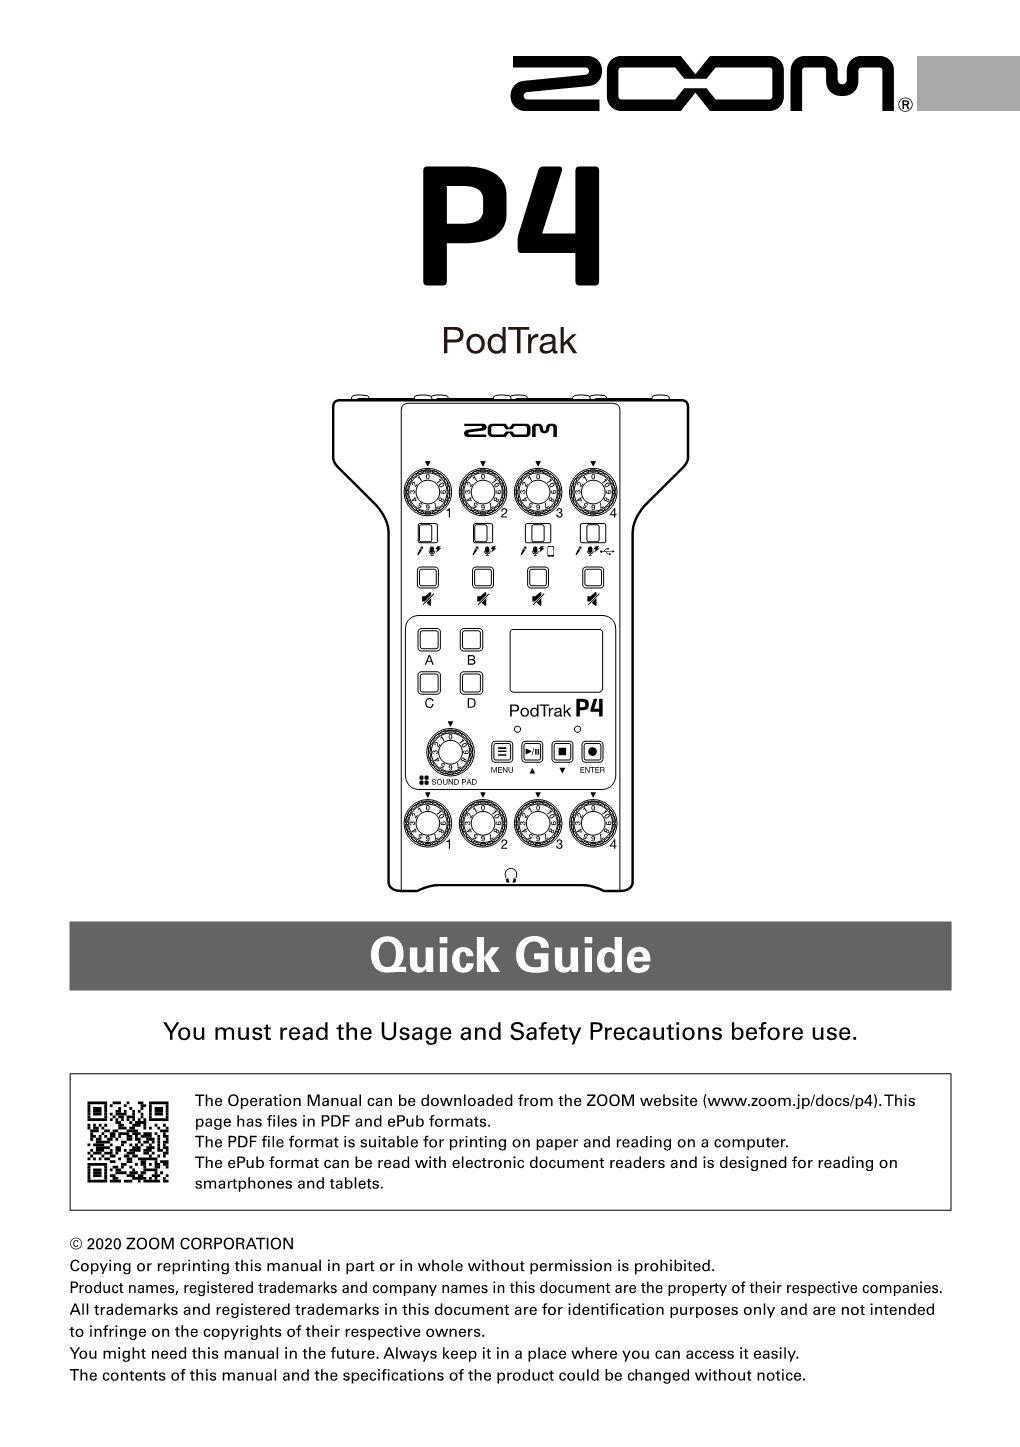 P4 Quick Guide